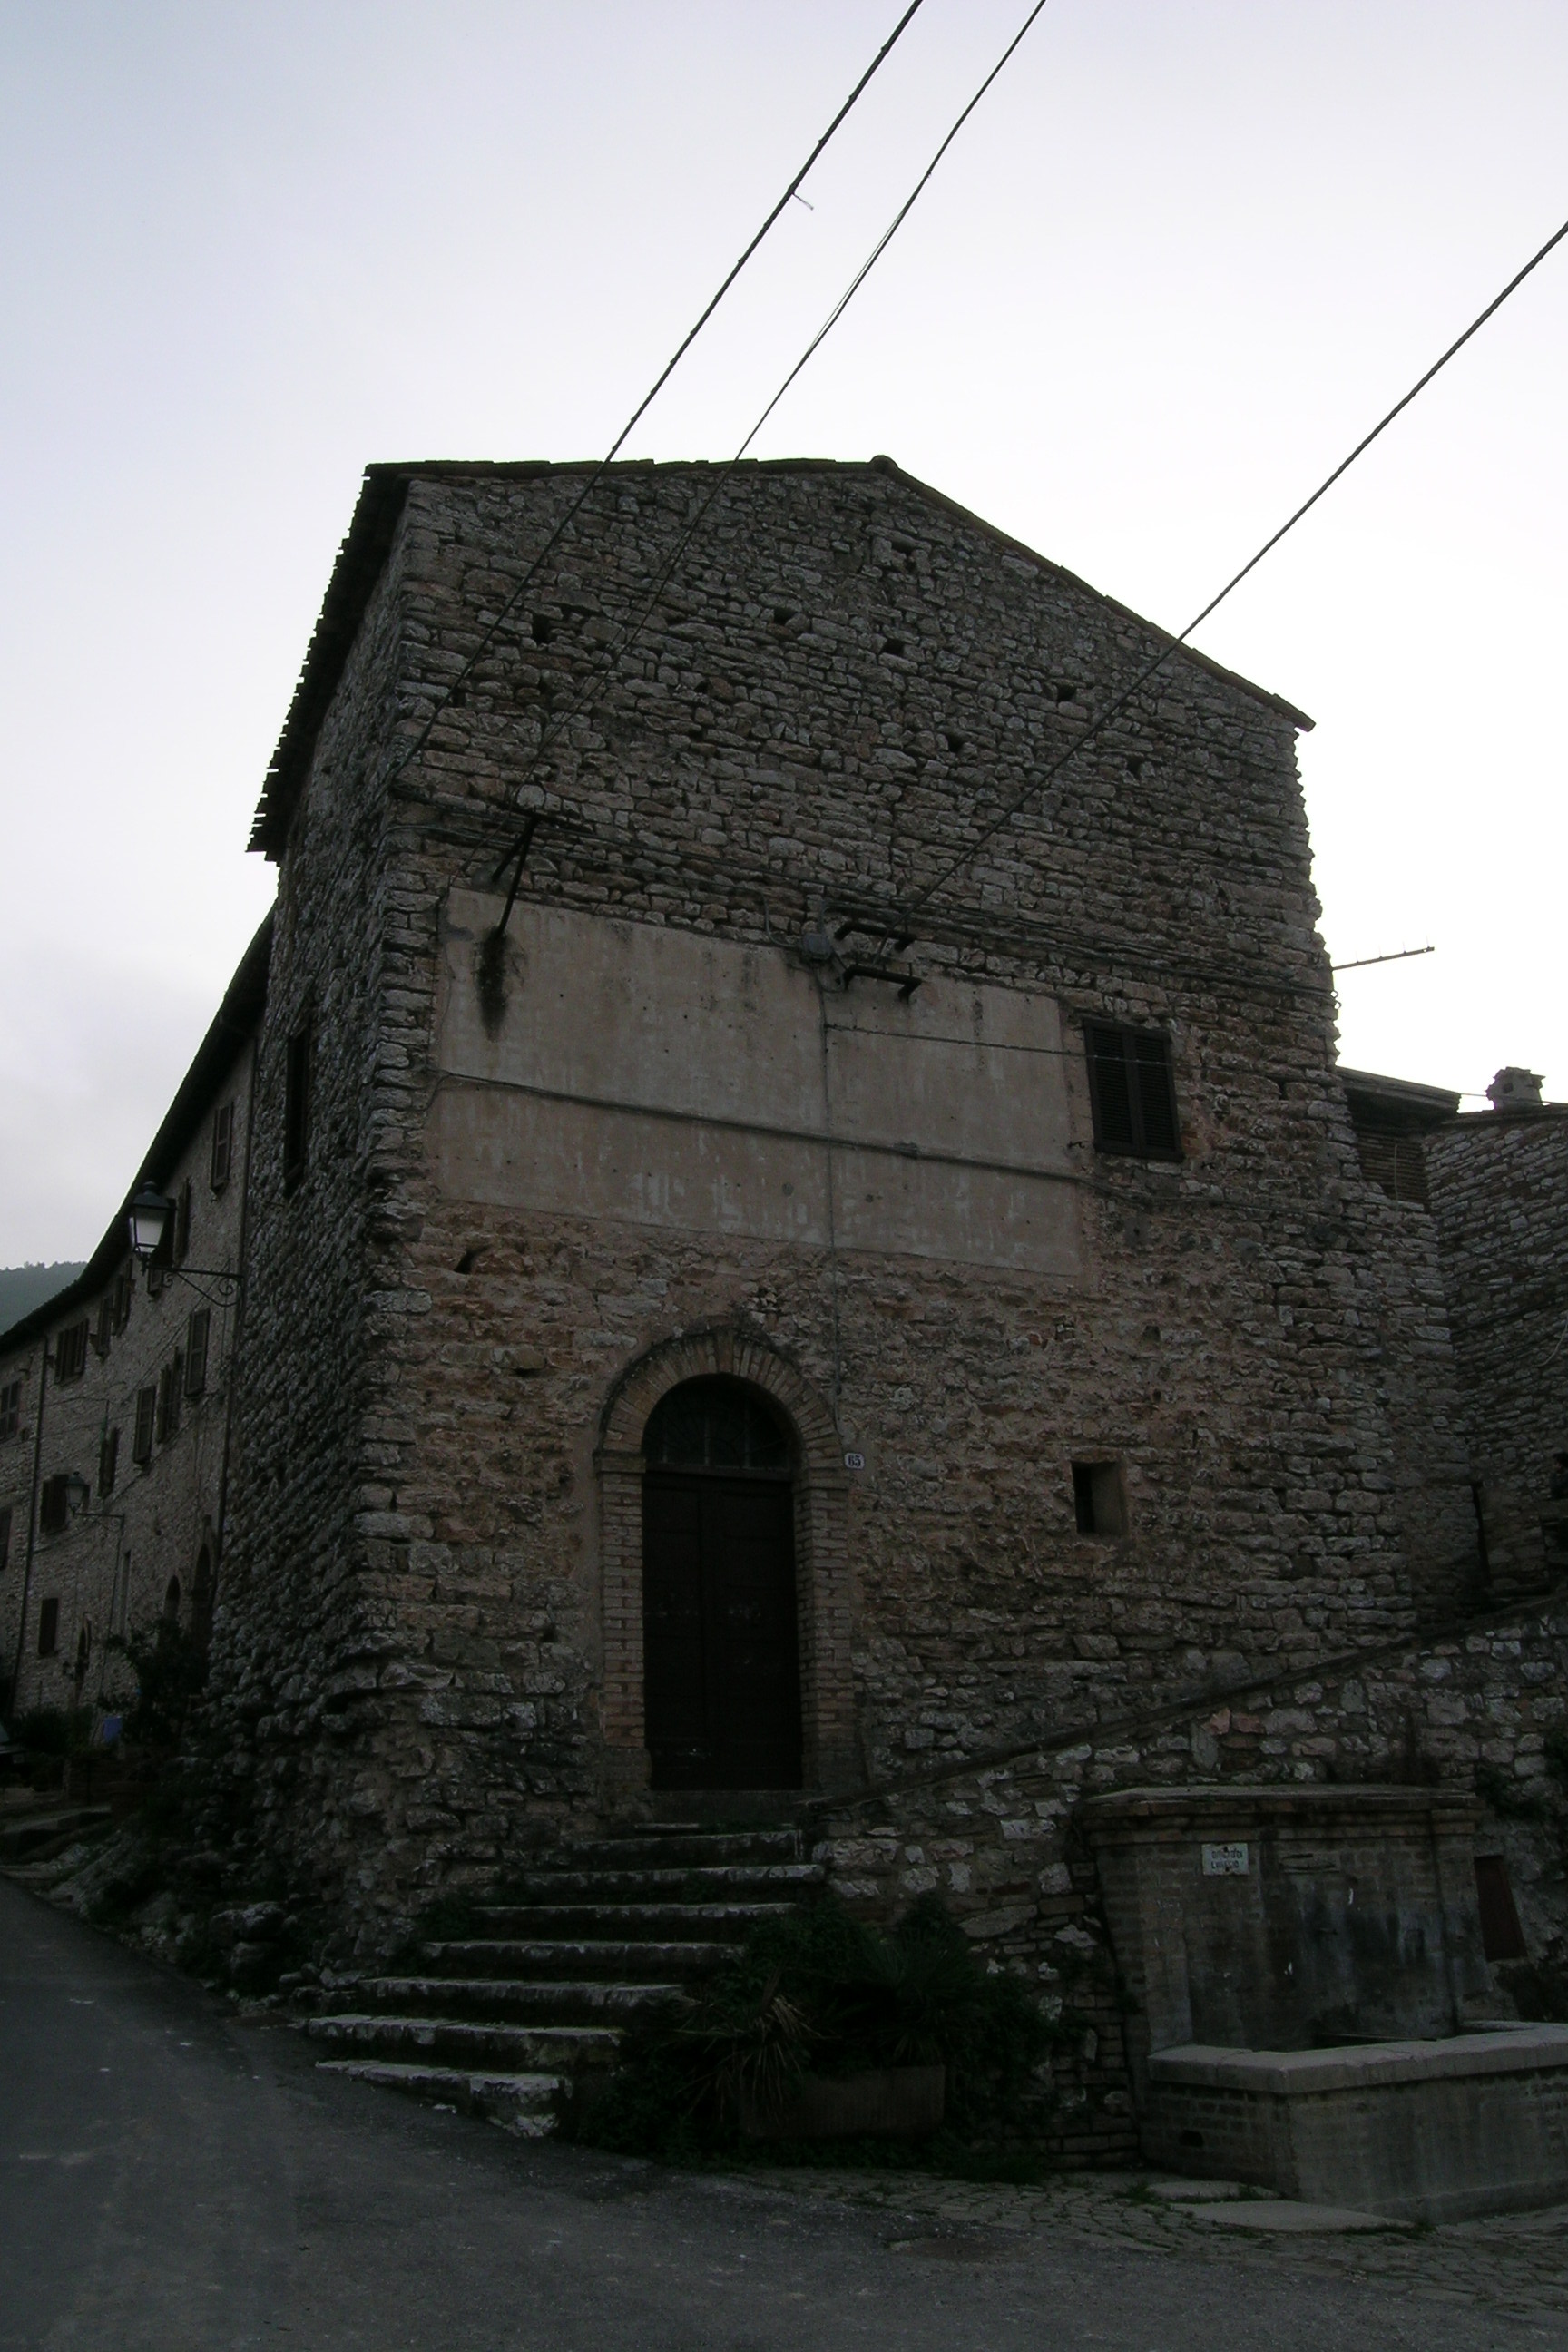 Torrione del Castello di Pievefavera (torrione, del castello) - Caldarola (MC) 